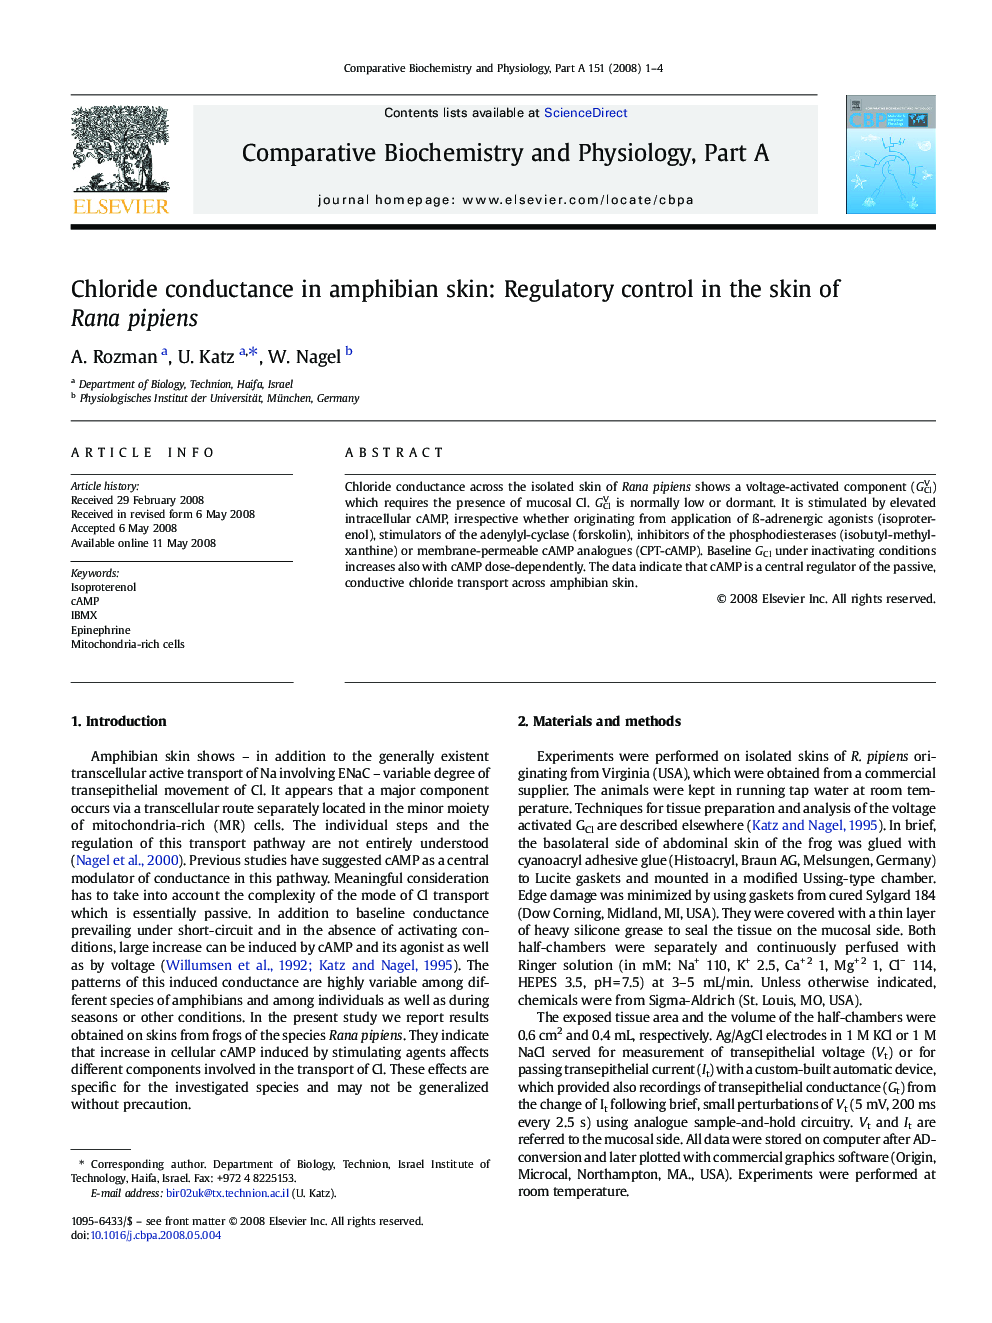 Chloride conductance in amphibian skin: Regulatory control in the skin of Rana pipiens